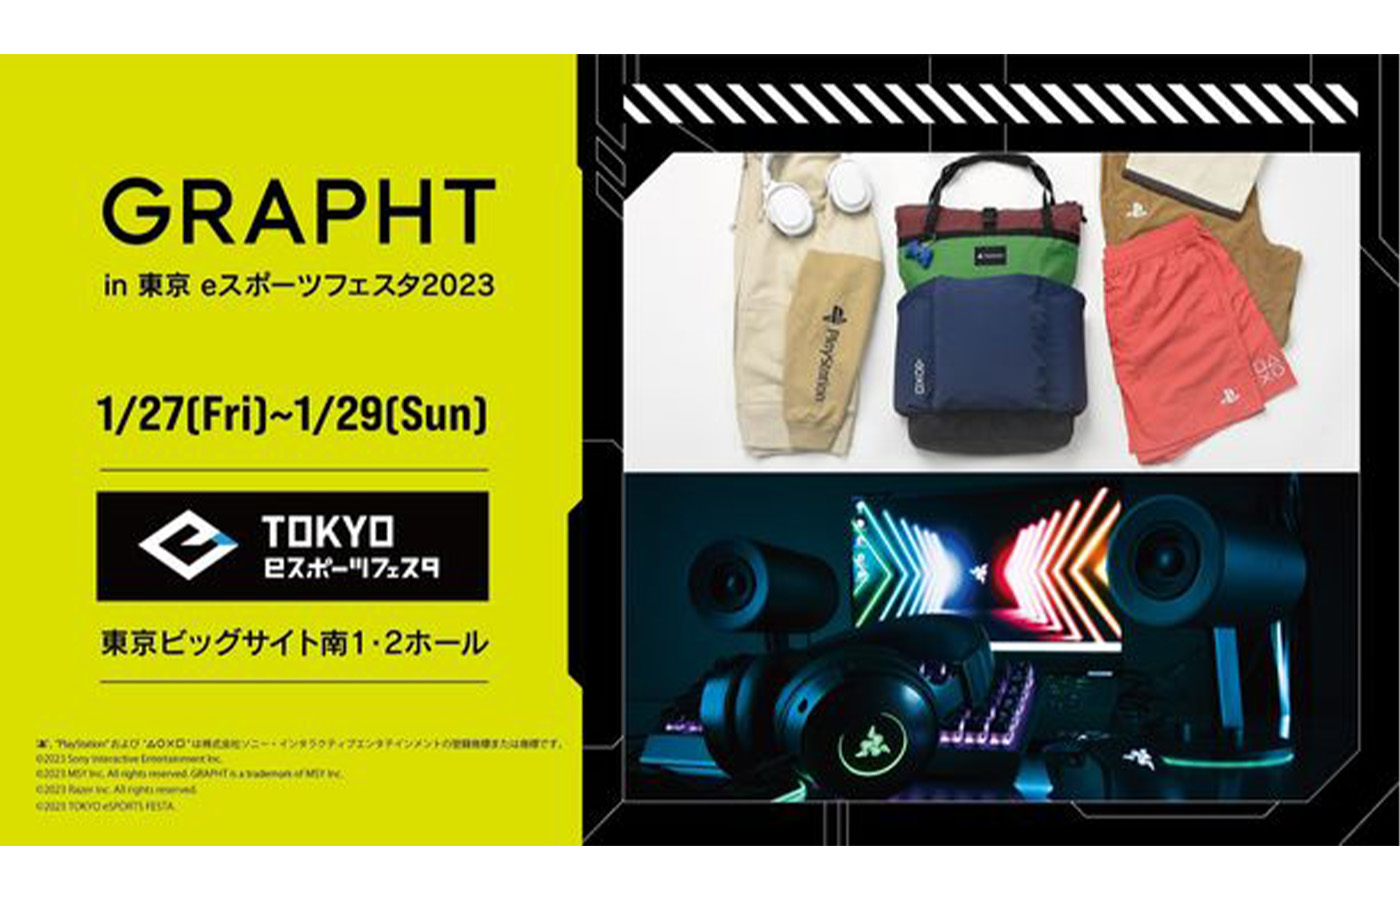 MSYが展開する「GAMING CENTER by GRAPHT」と「DeviceMe」が「東京eスポーツフェスタ2023」に出展